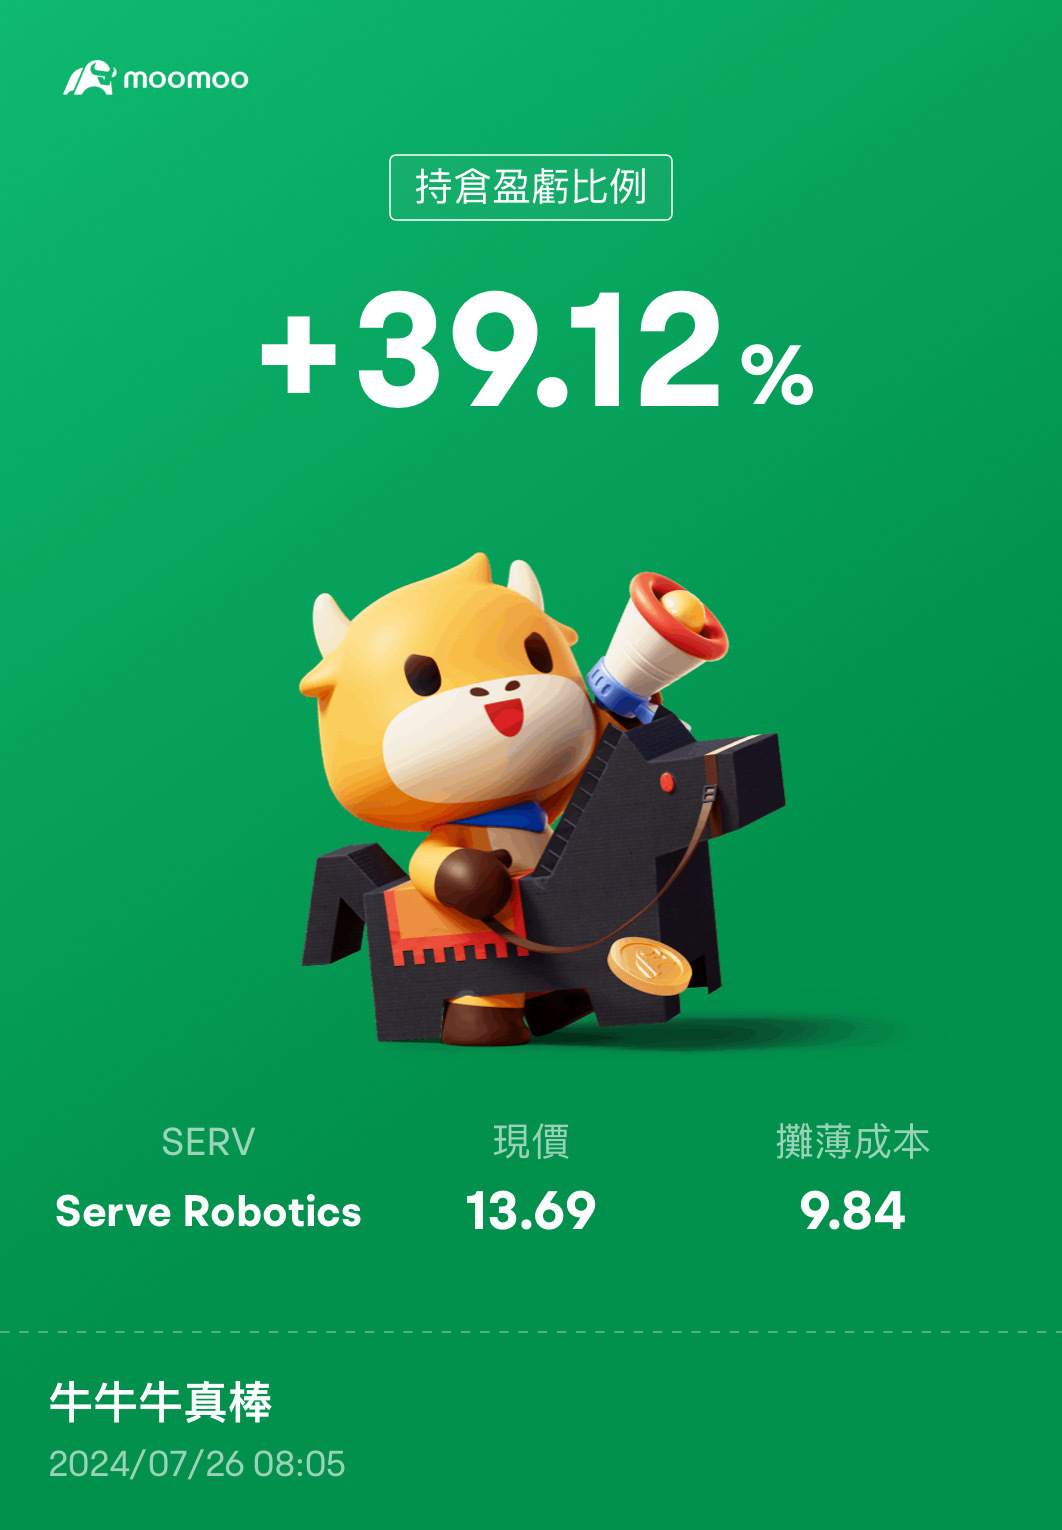 $Serve Robotics (SERV.US)$ A wonderful day [Drool]